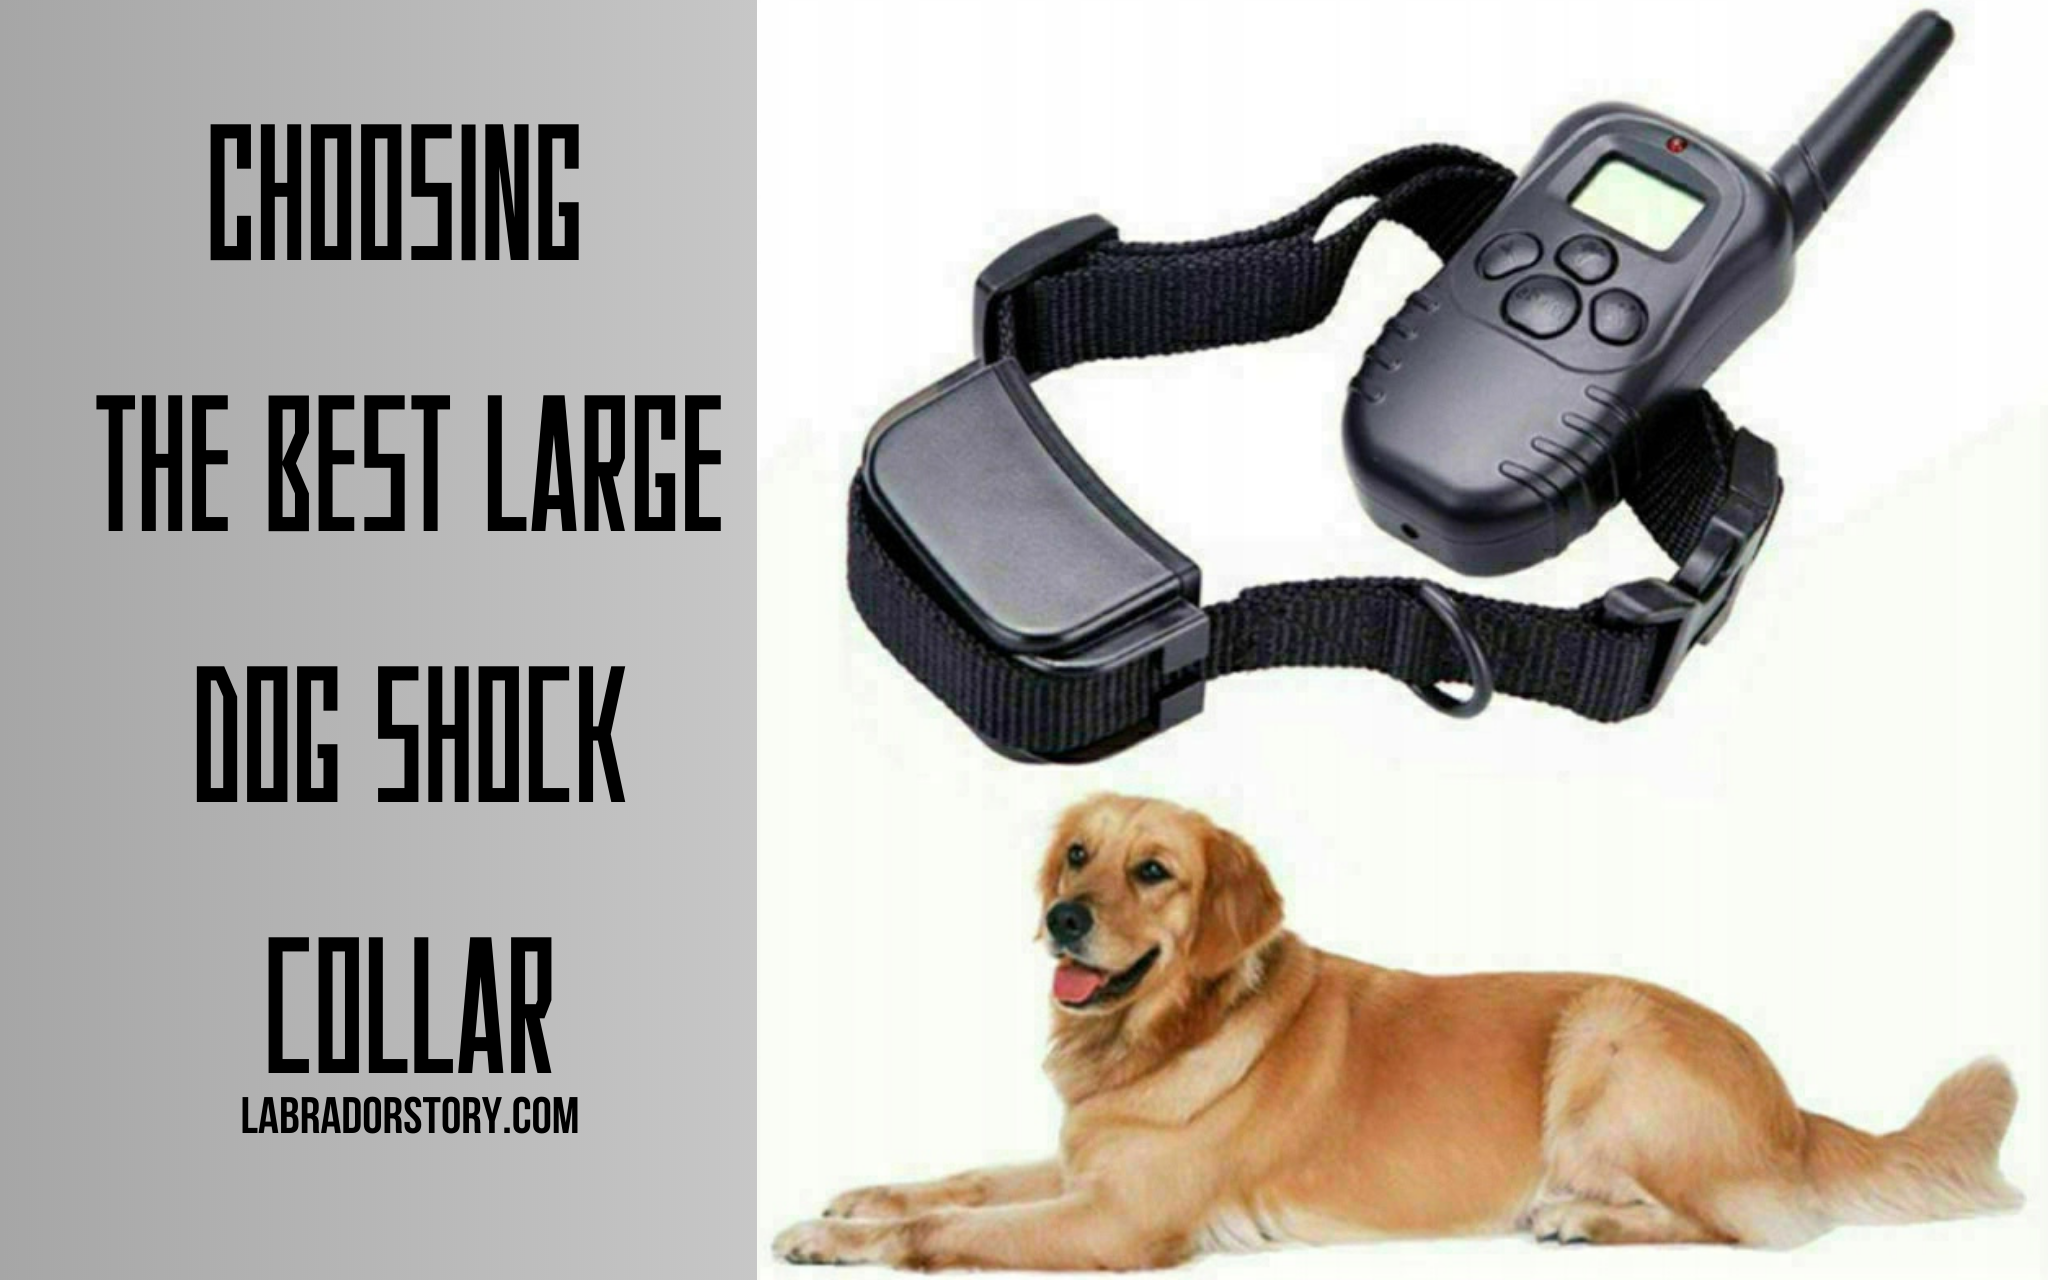 Choosing the best large dog shock collar